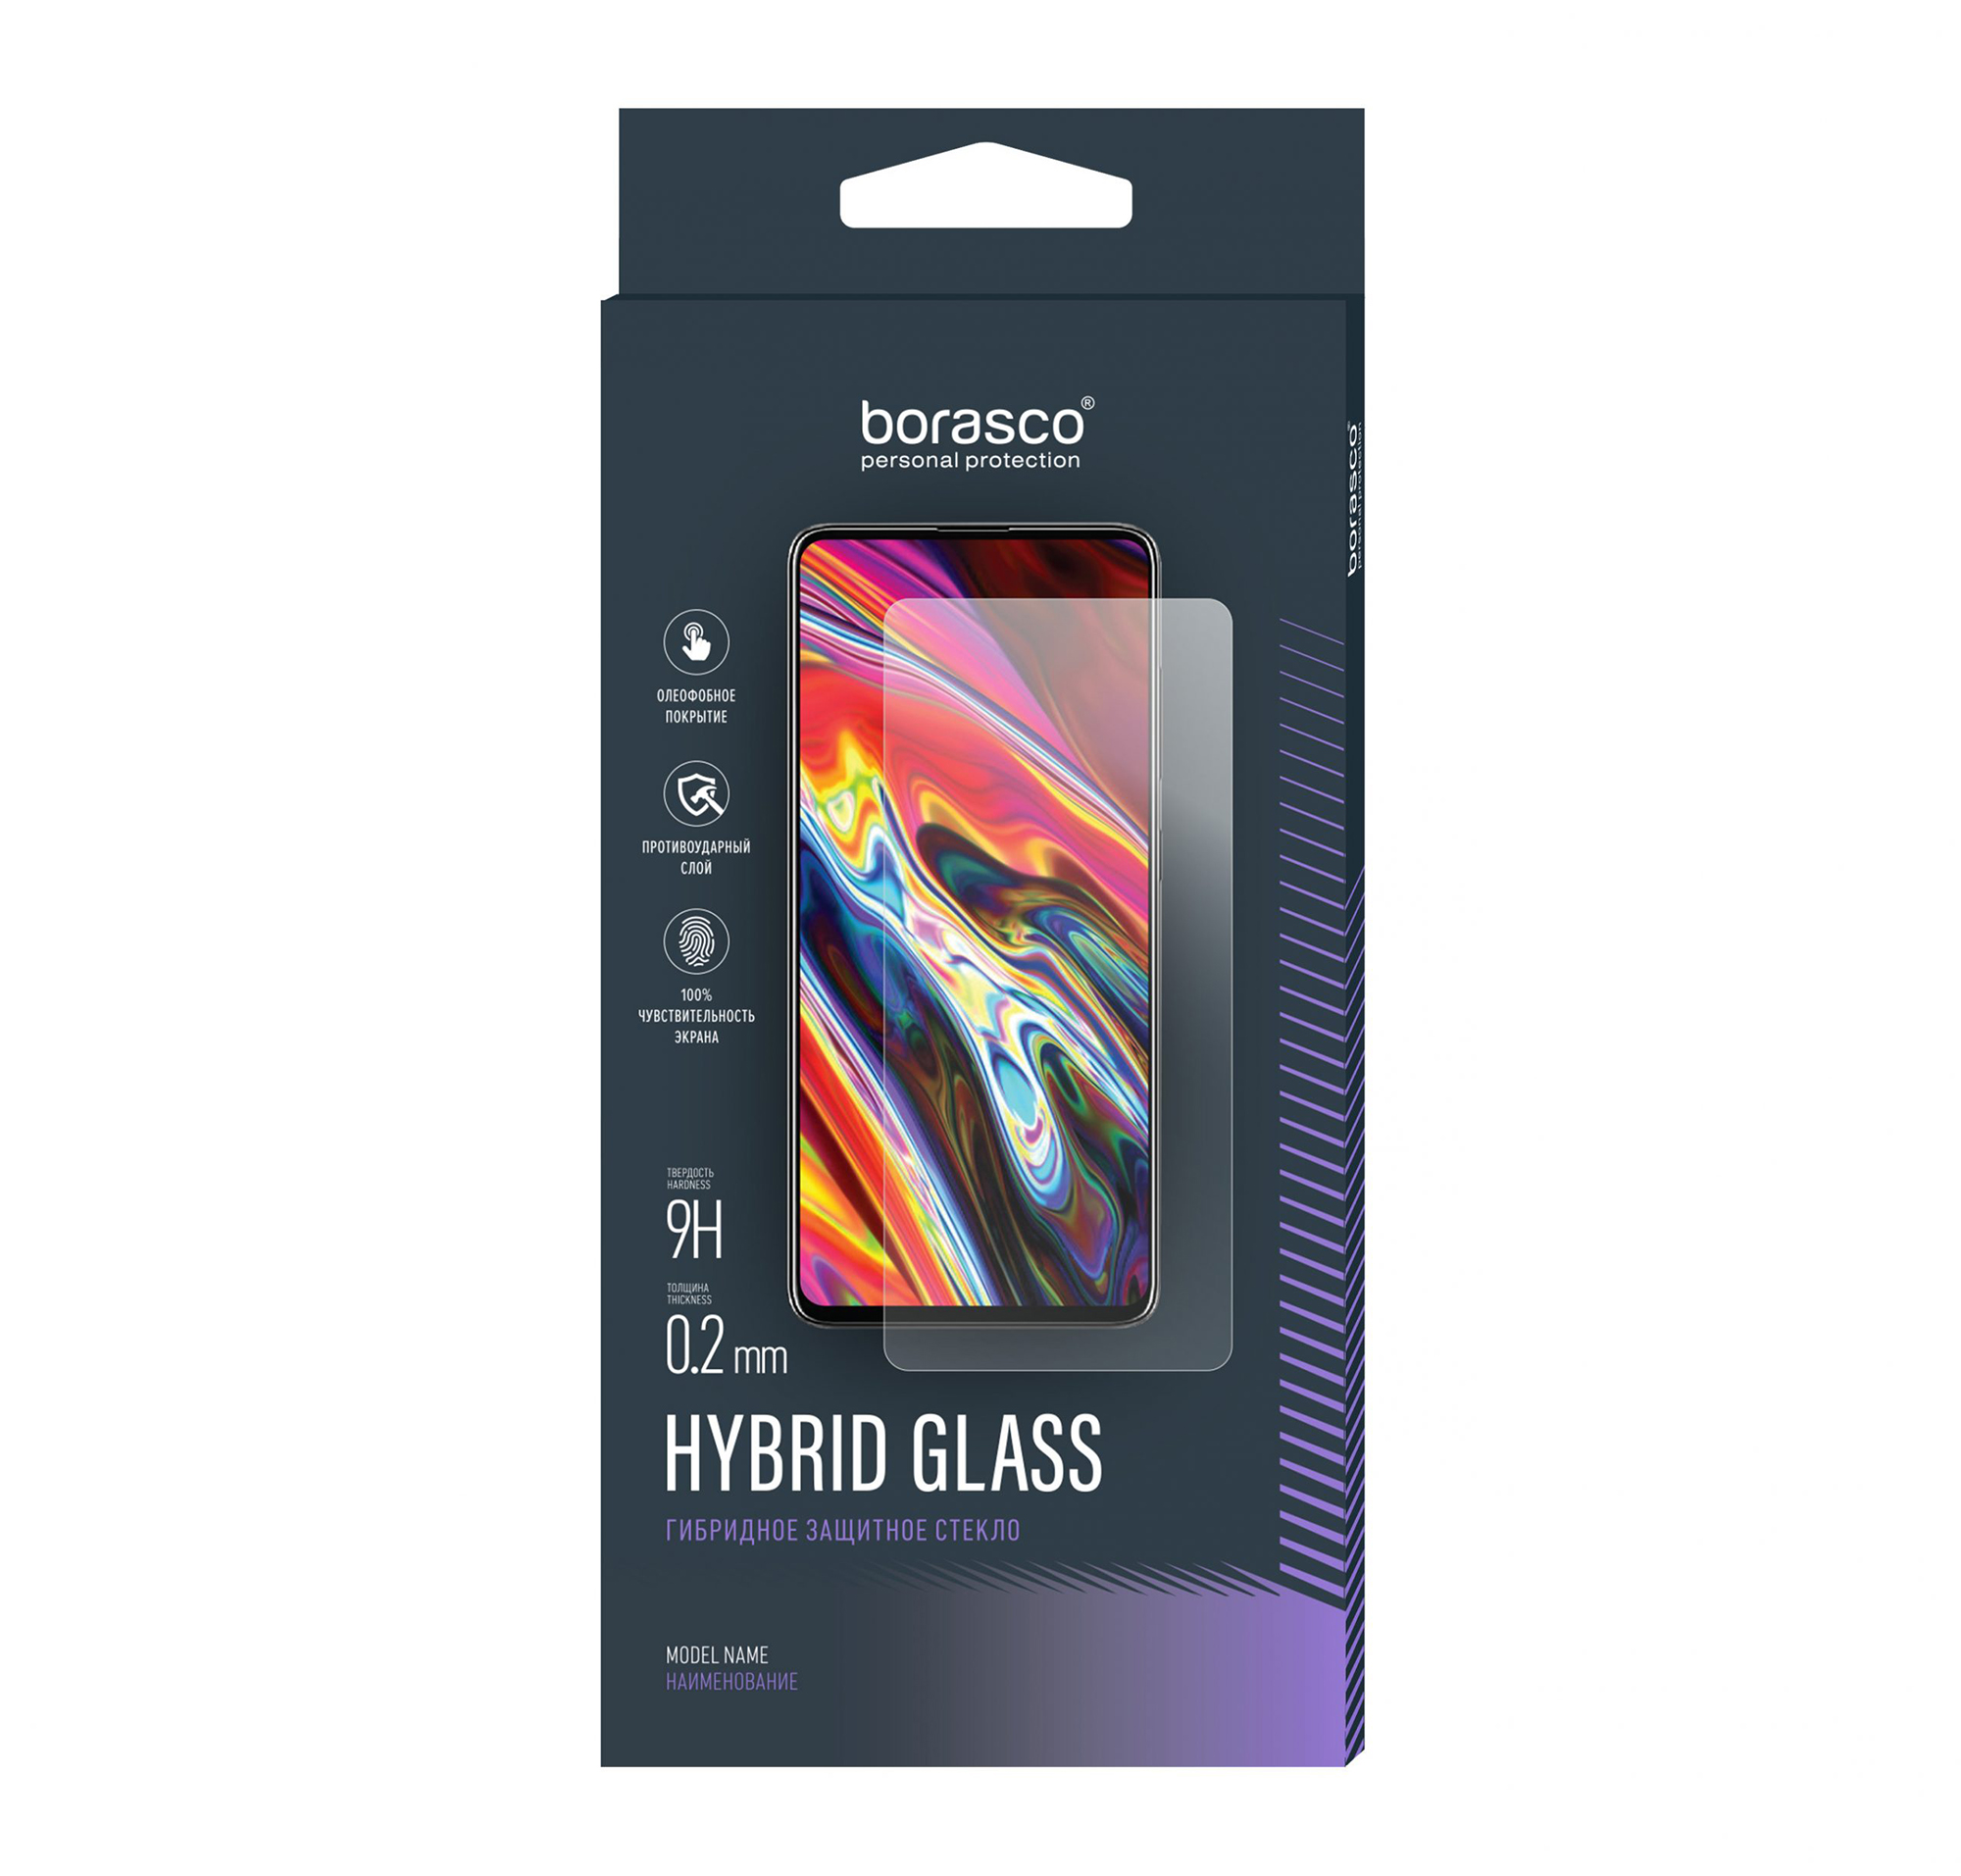 Защитное стекло Hybrid Glass для Xiaomi Mi 10T/ Mi 10T Pro защитное стекло vixion для xiaomi mi 10t lite 3d black gs 00014010